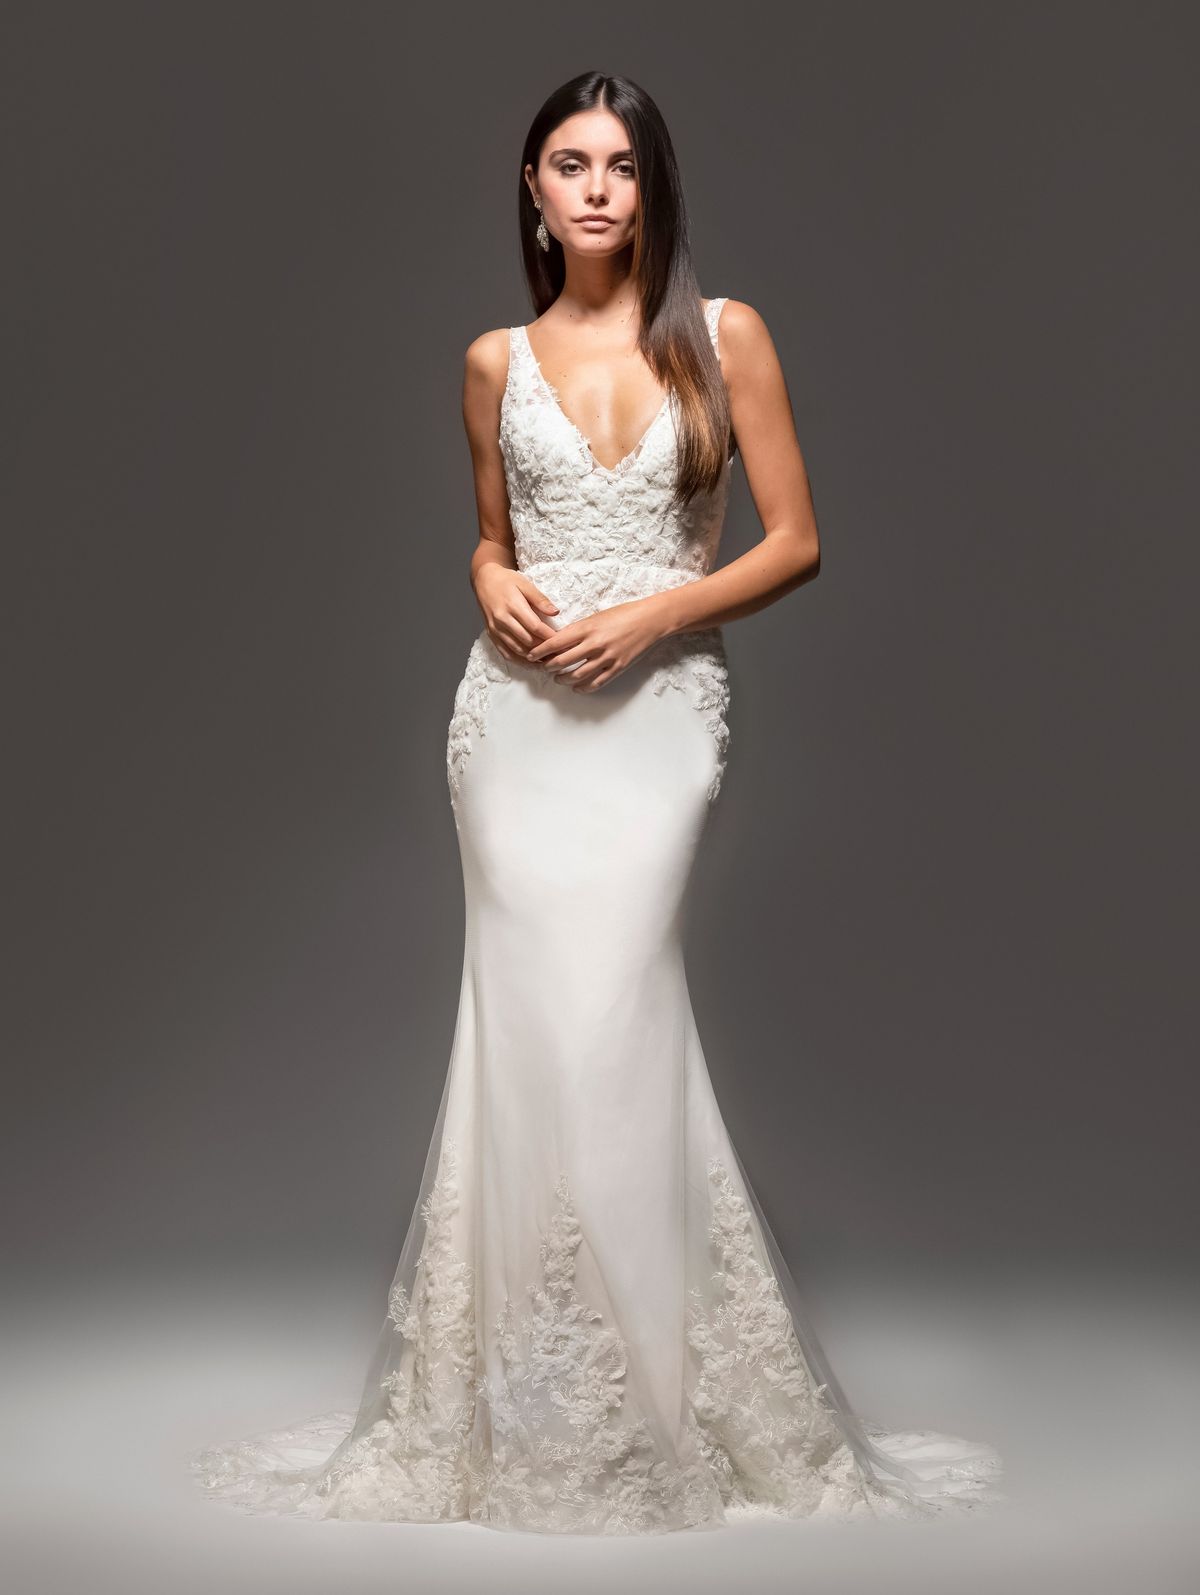 Style STYLE 22008 LIZA Tara Keely by Lazaro Size 12 Wedding Plunge White Mermaid Dress on Queenly